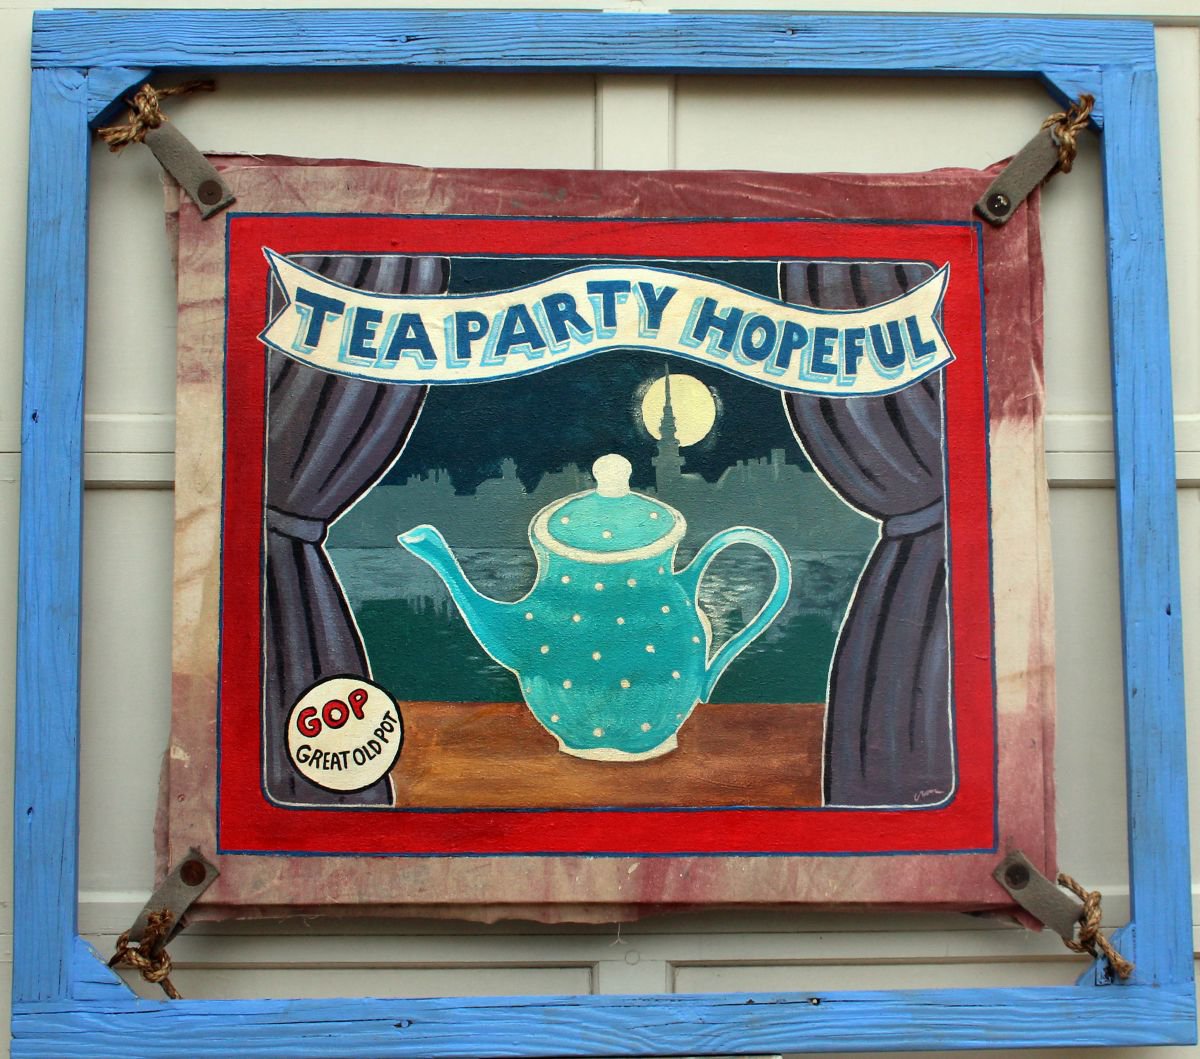 Tea Party Hopeful by Ken Vrana